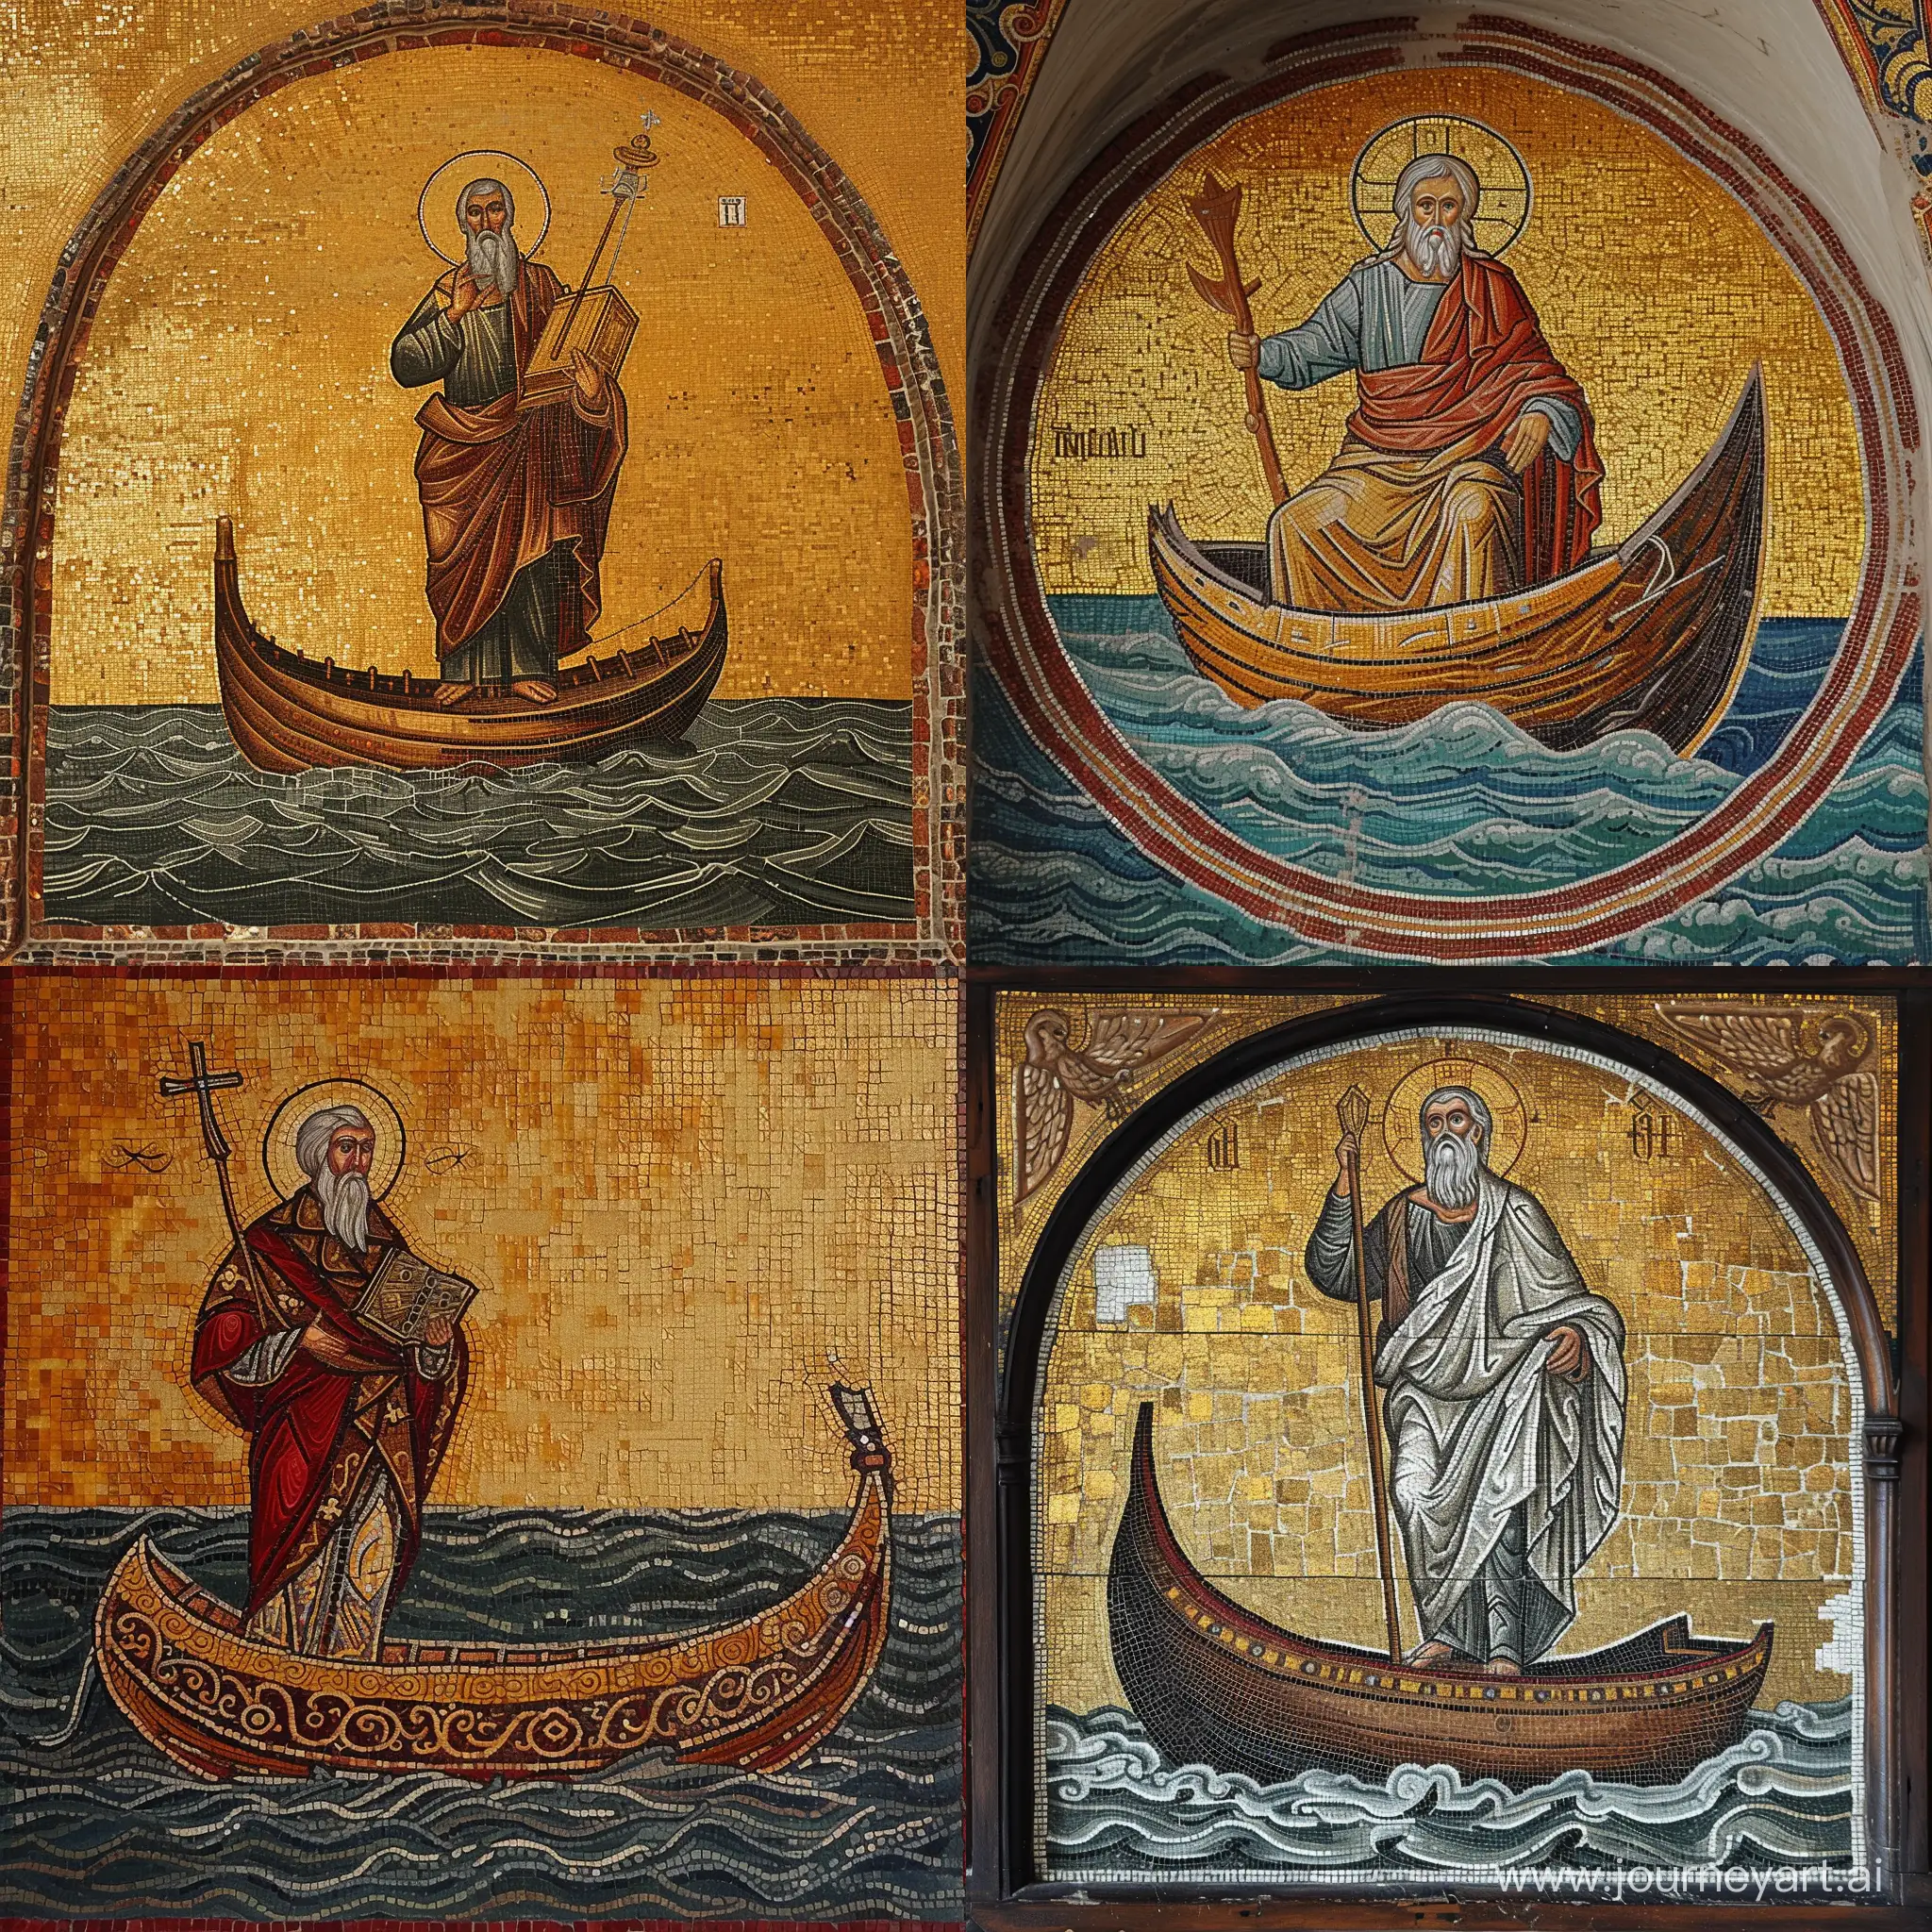 Holy-Elder-Icon-Byzantine-Style-Mosaic-on-a-Boat